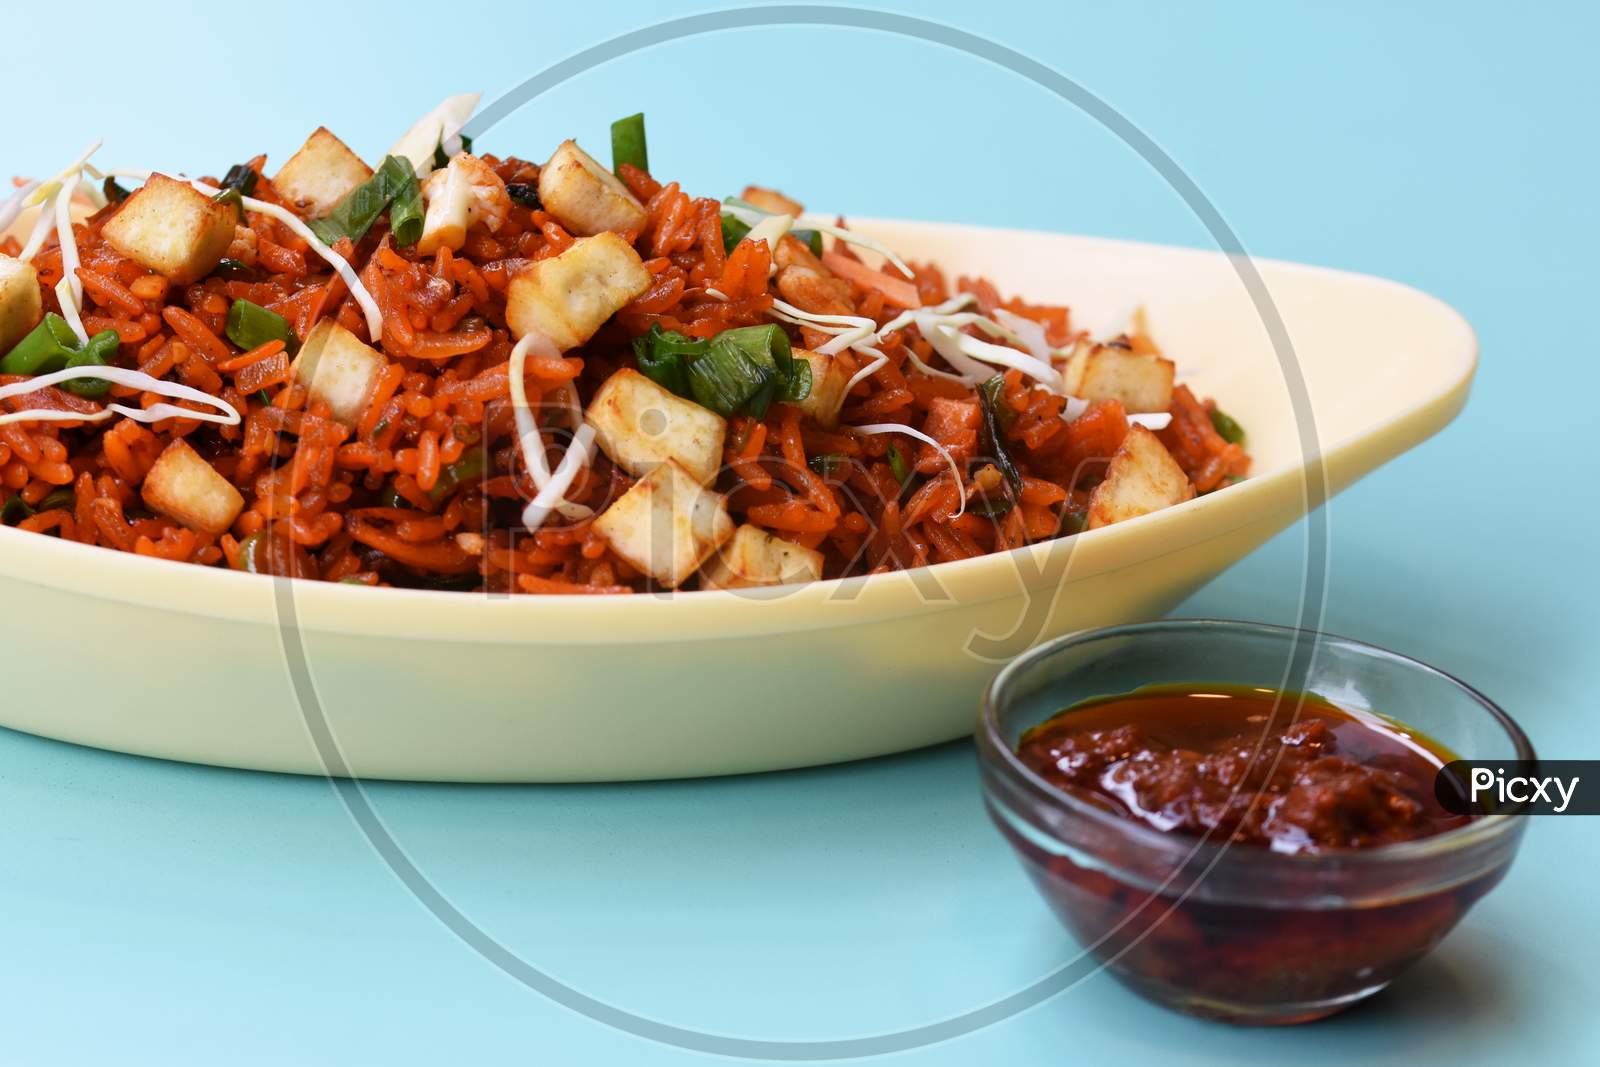 Schezwan Paneer Fried Rice With Schezwan Sauce,Chinese Fried Rice With Paneer,Indo-Chinese Cuisine Dishes. Selective Focus